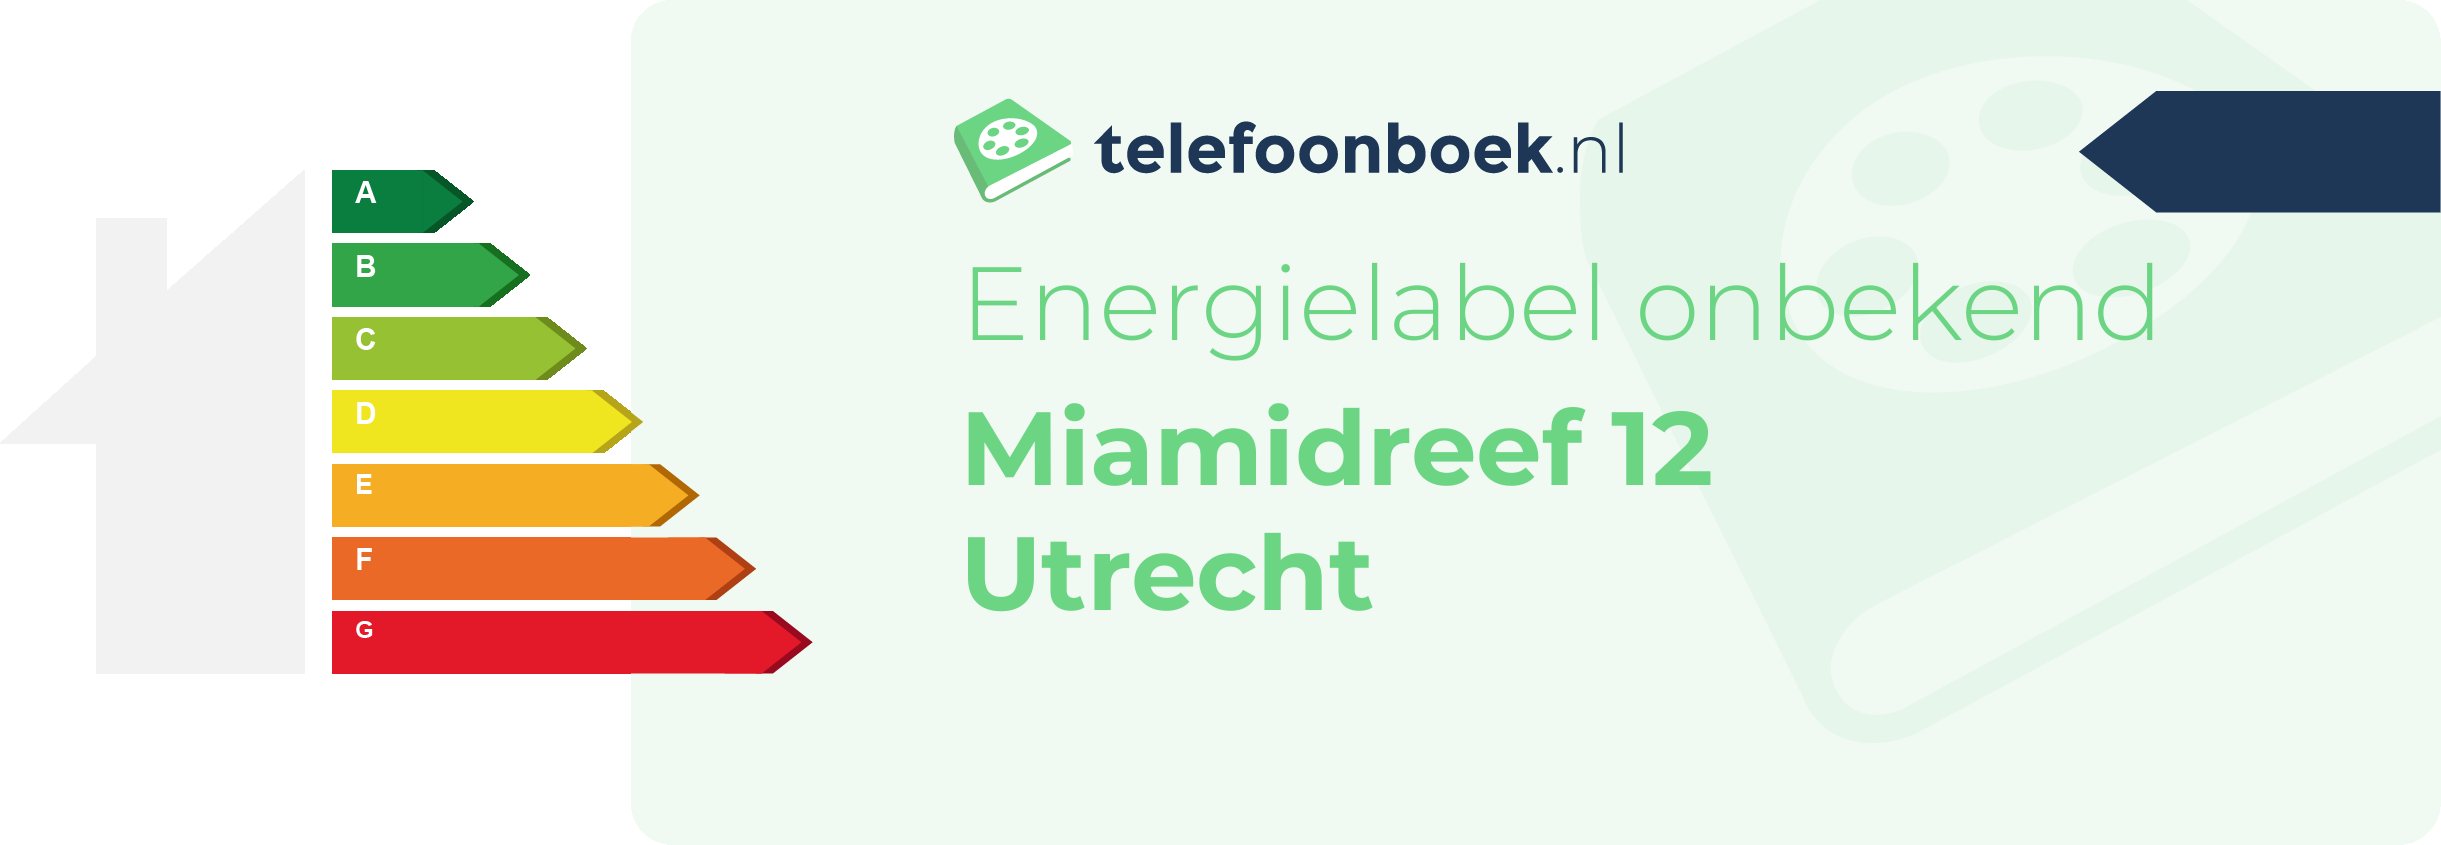 Energielabel Miamidreef 12 Utrecht